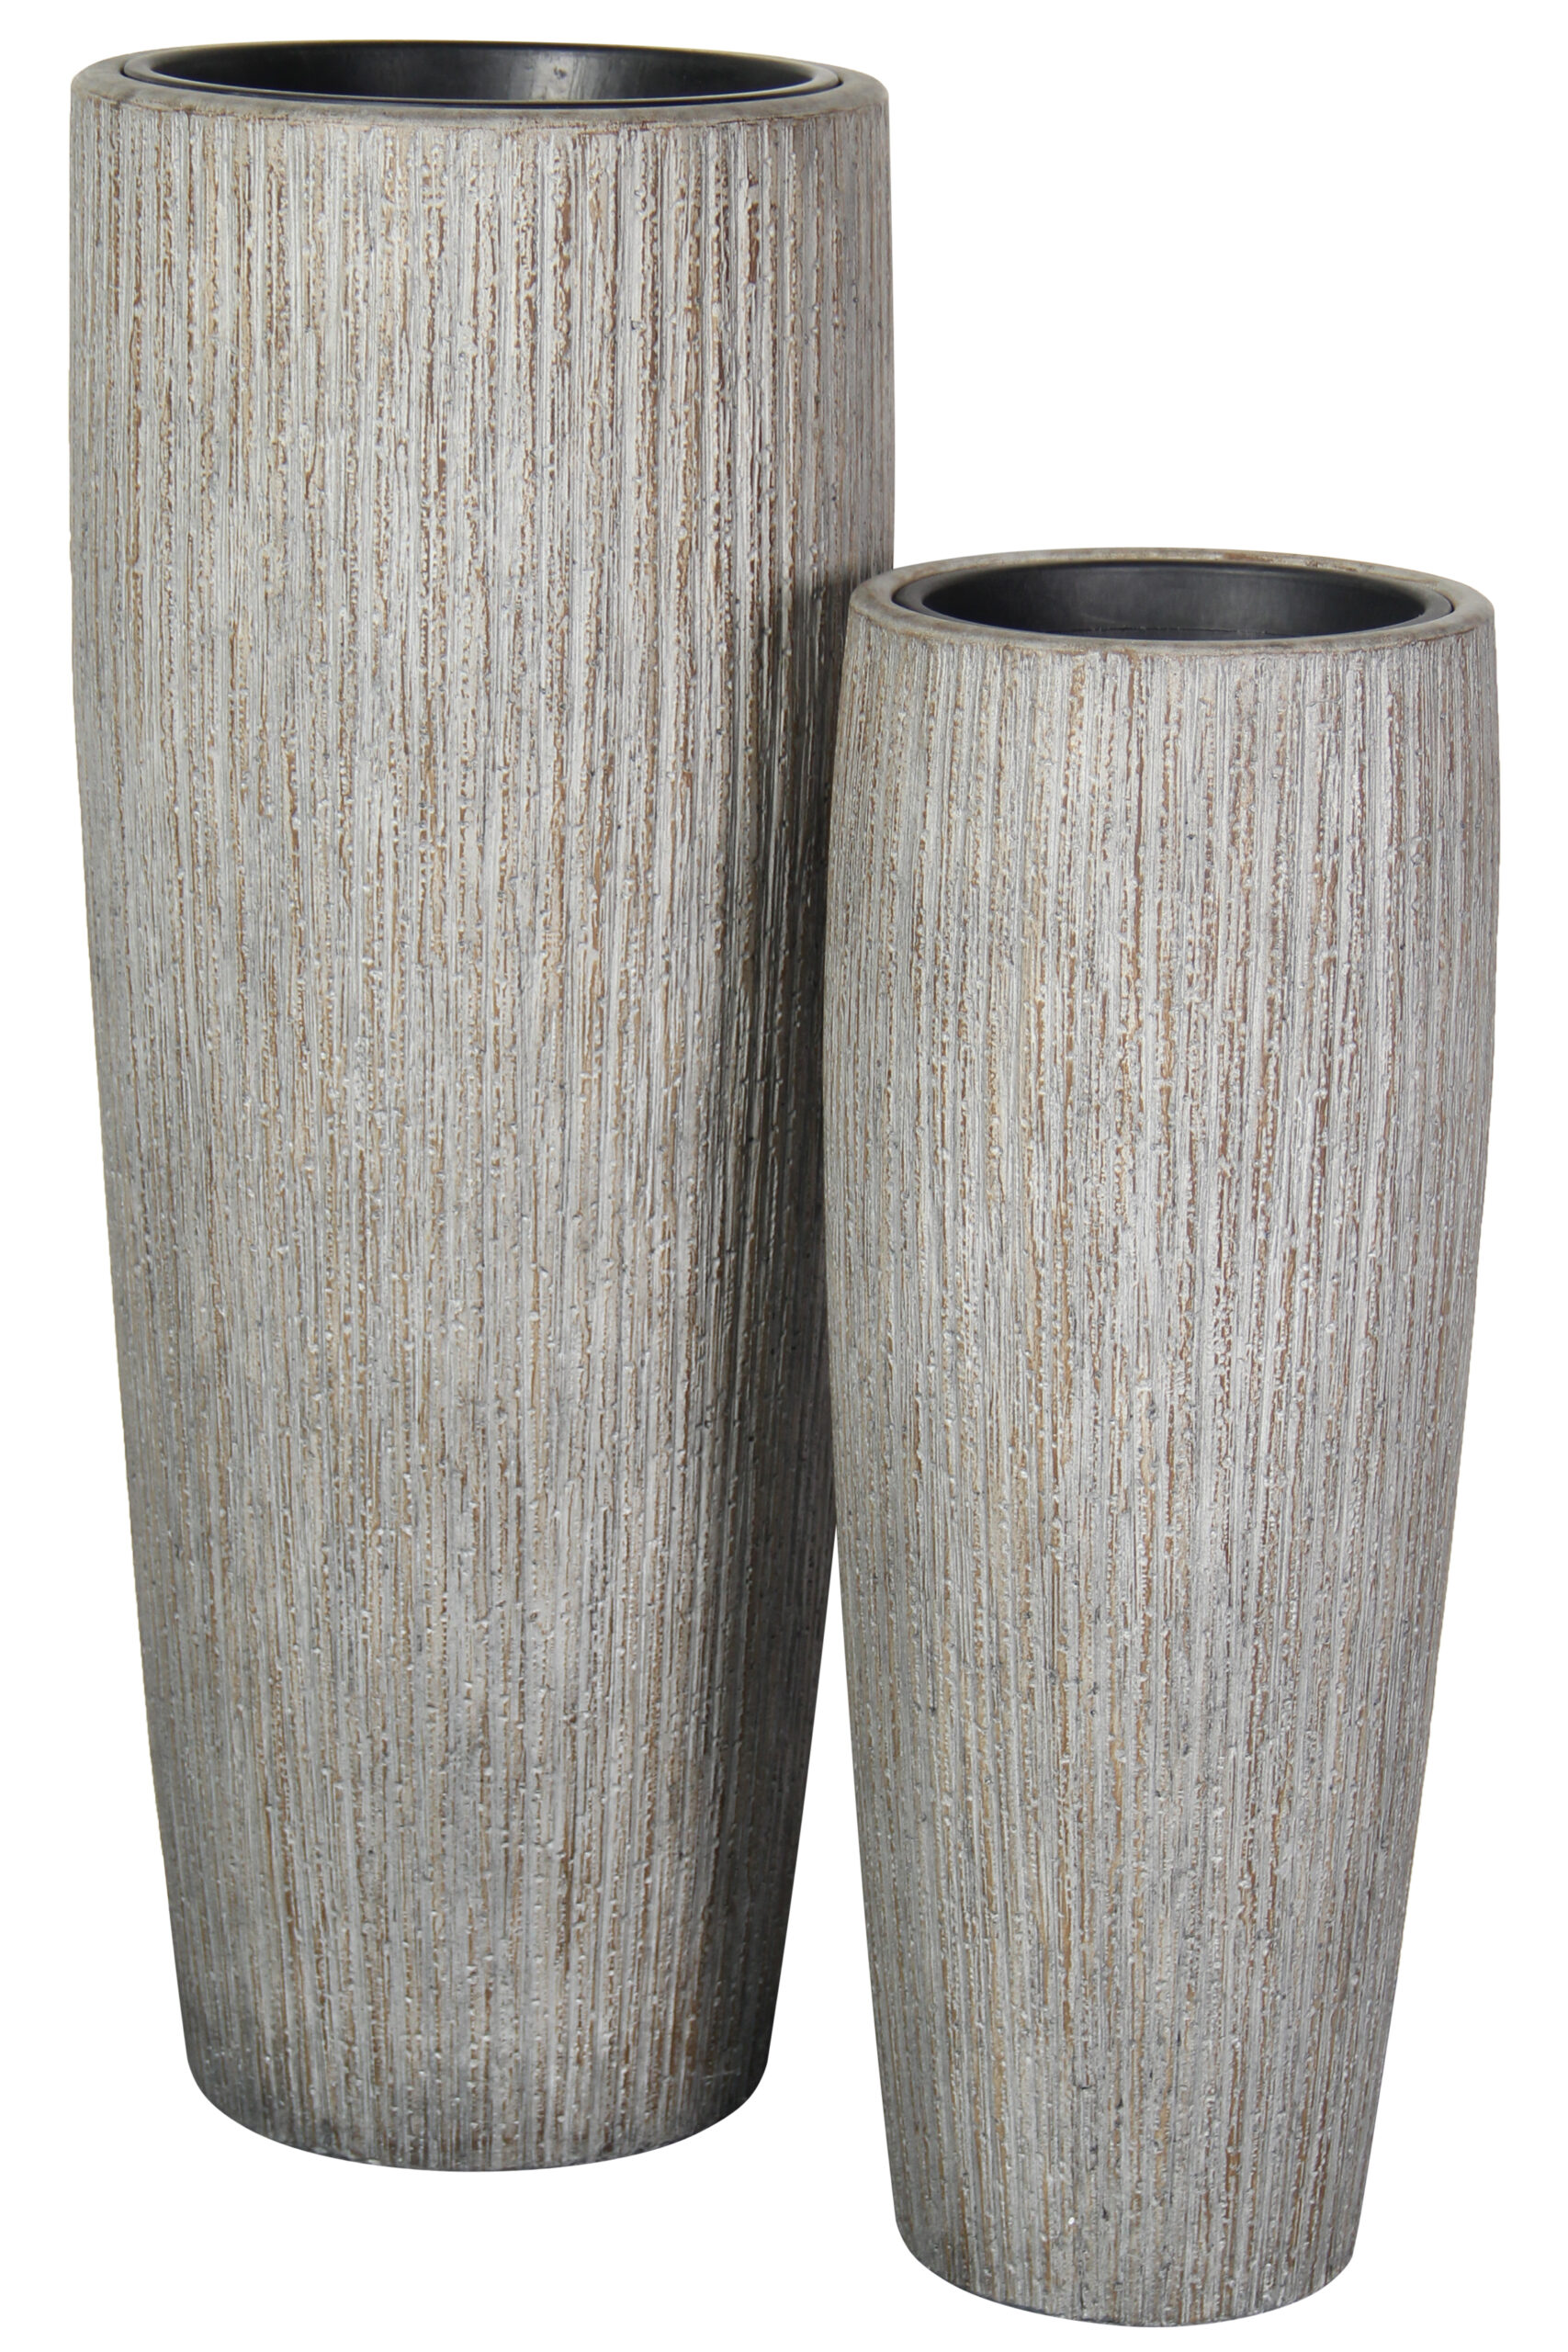 Clare high vase round set 2 – Rusty grey